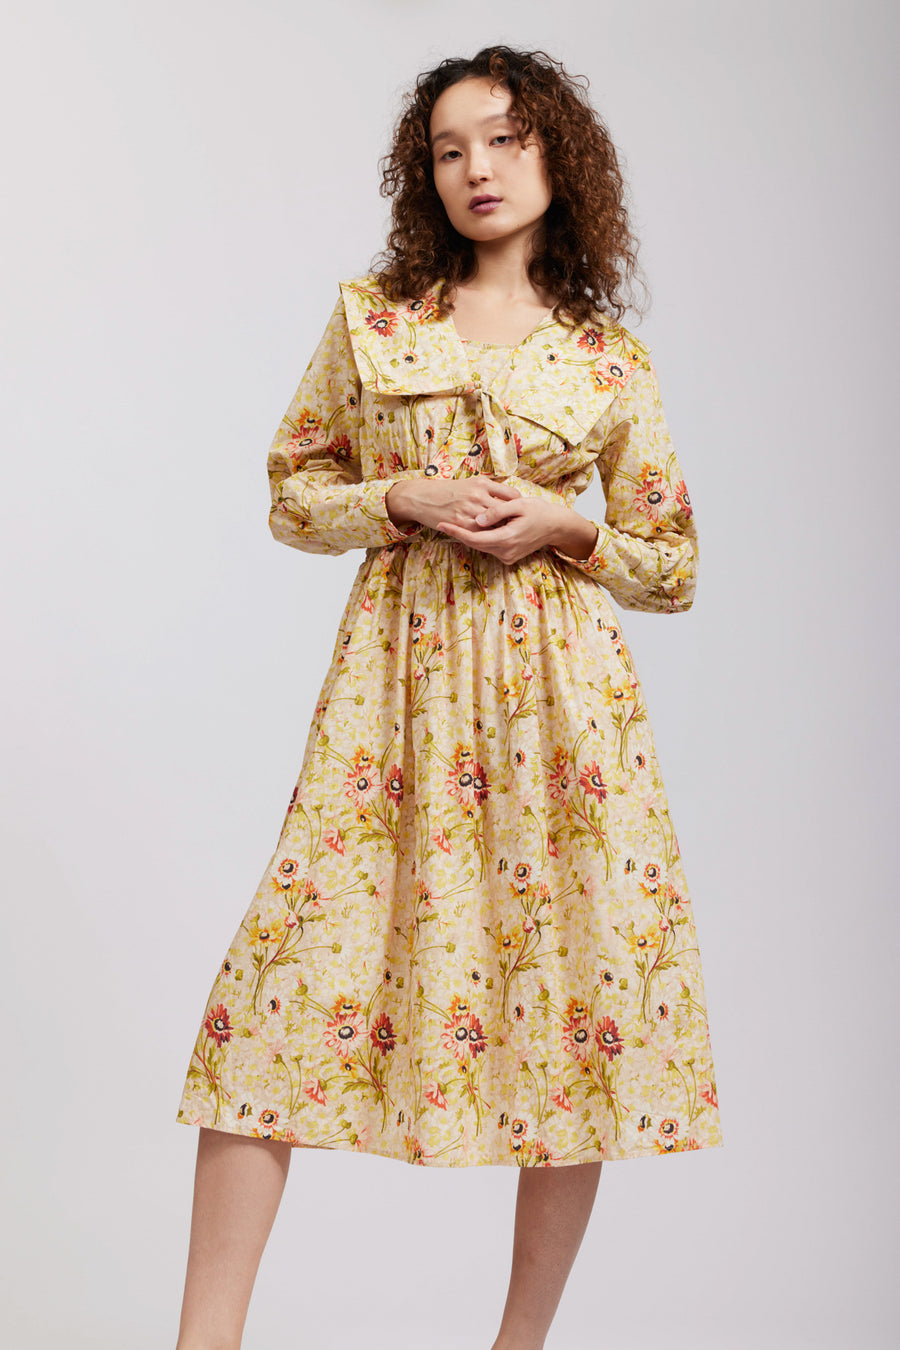 BATSHEVA - Laura Ashley x Batsheva Osian Dress in Witton Floral